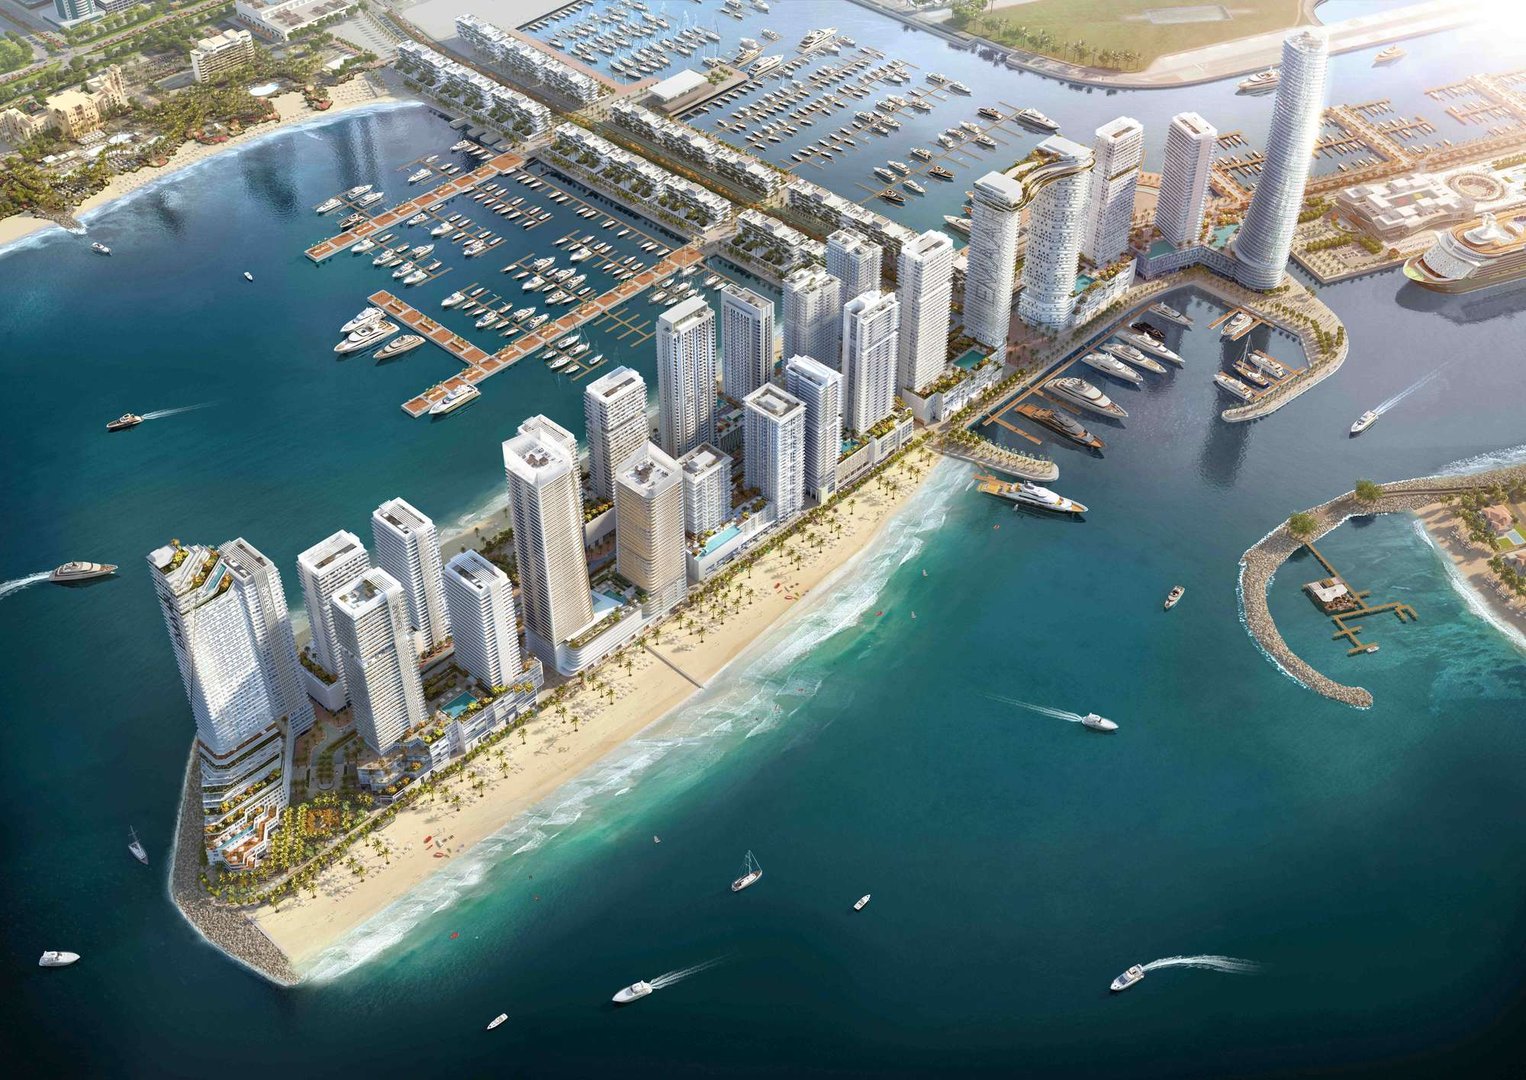 Houses for Sale Along Dubai's Coastline